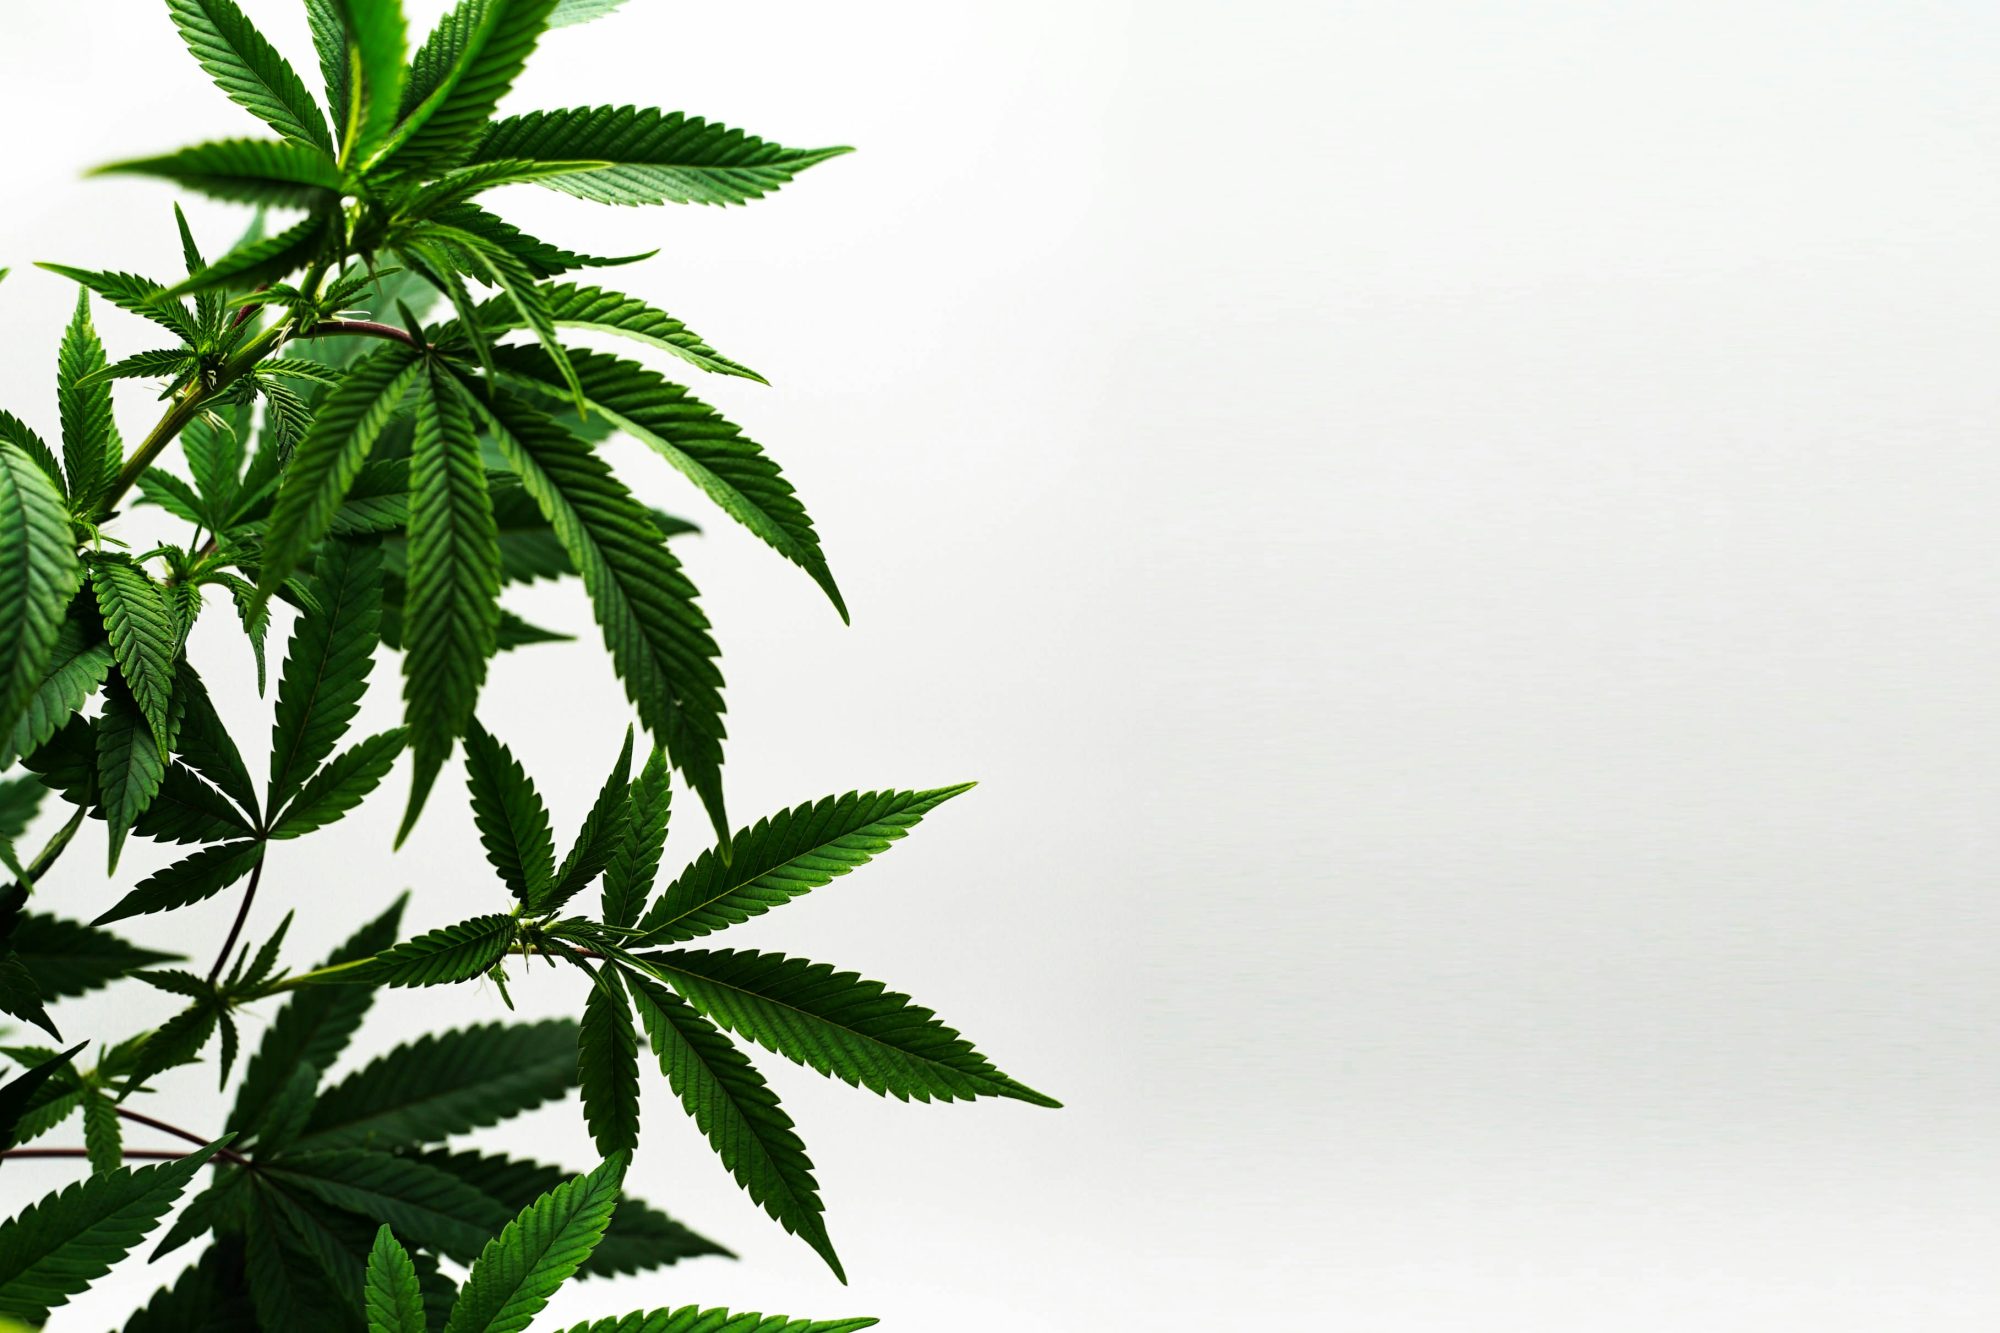 Cannabis Leaves - Marijuana Cultivation